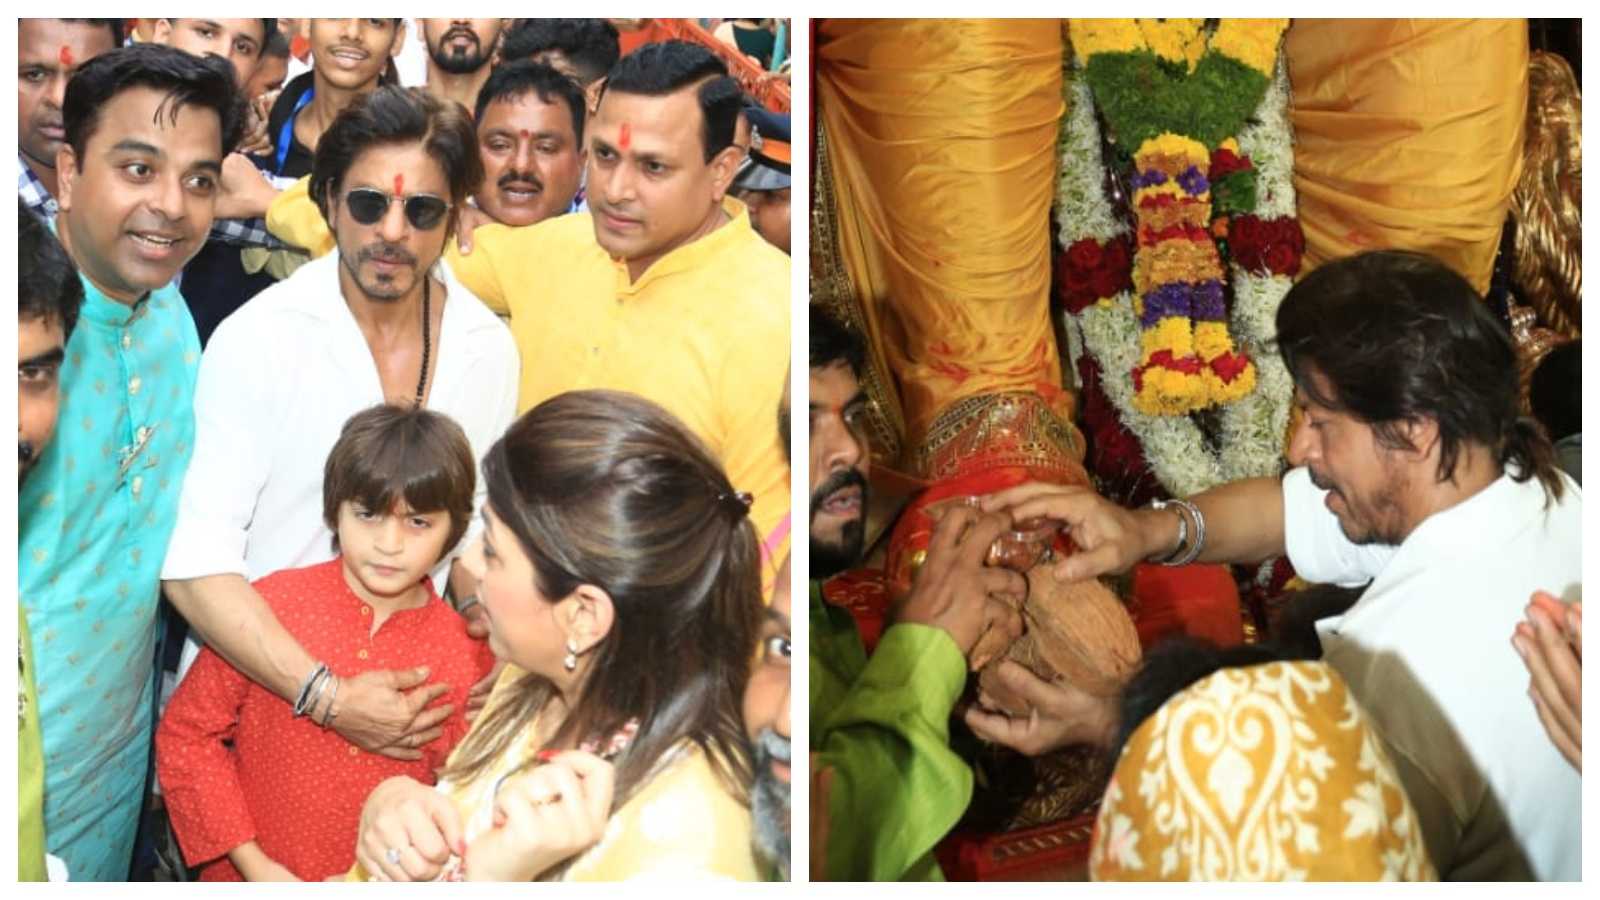 Shah Rukh Khan visits Lalbaugcha Raja with AbRam amid Jawan's success, gets trolled